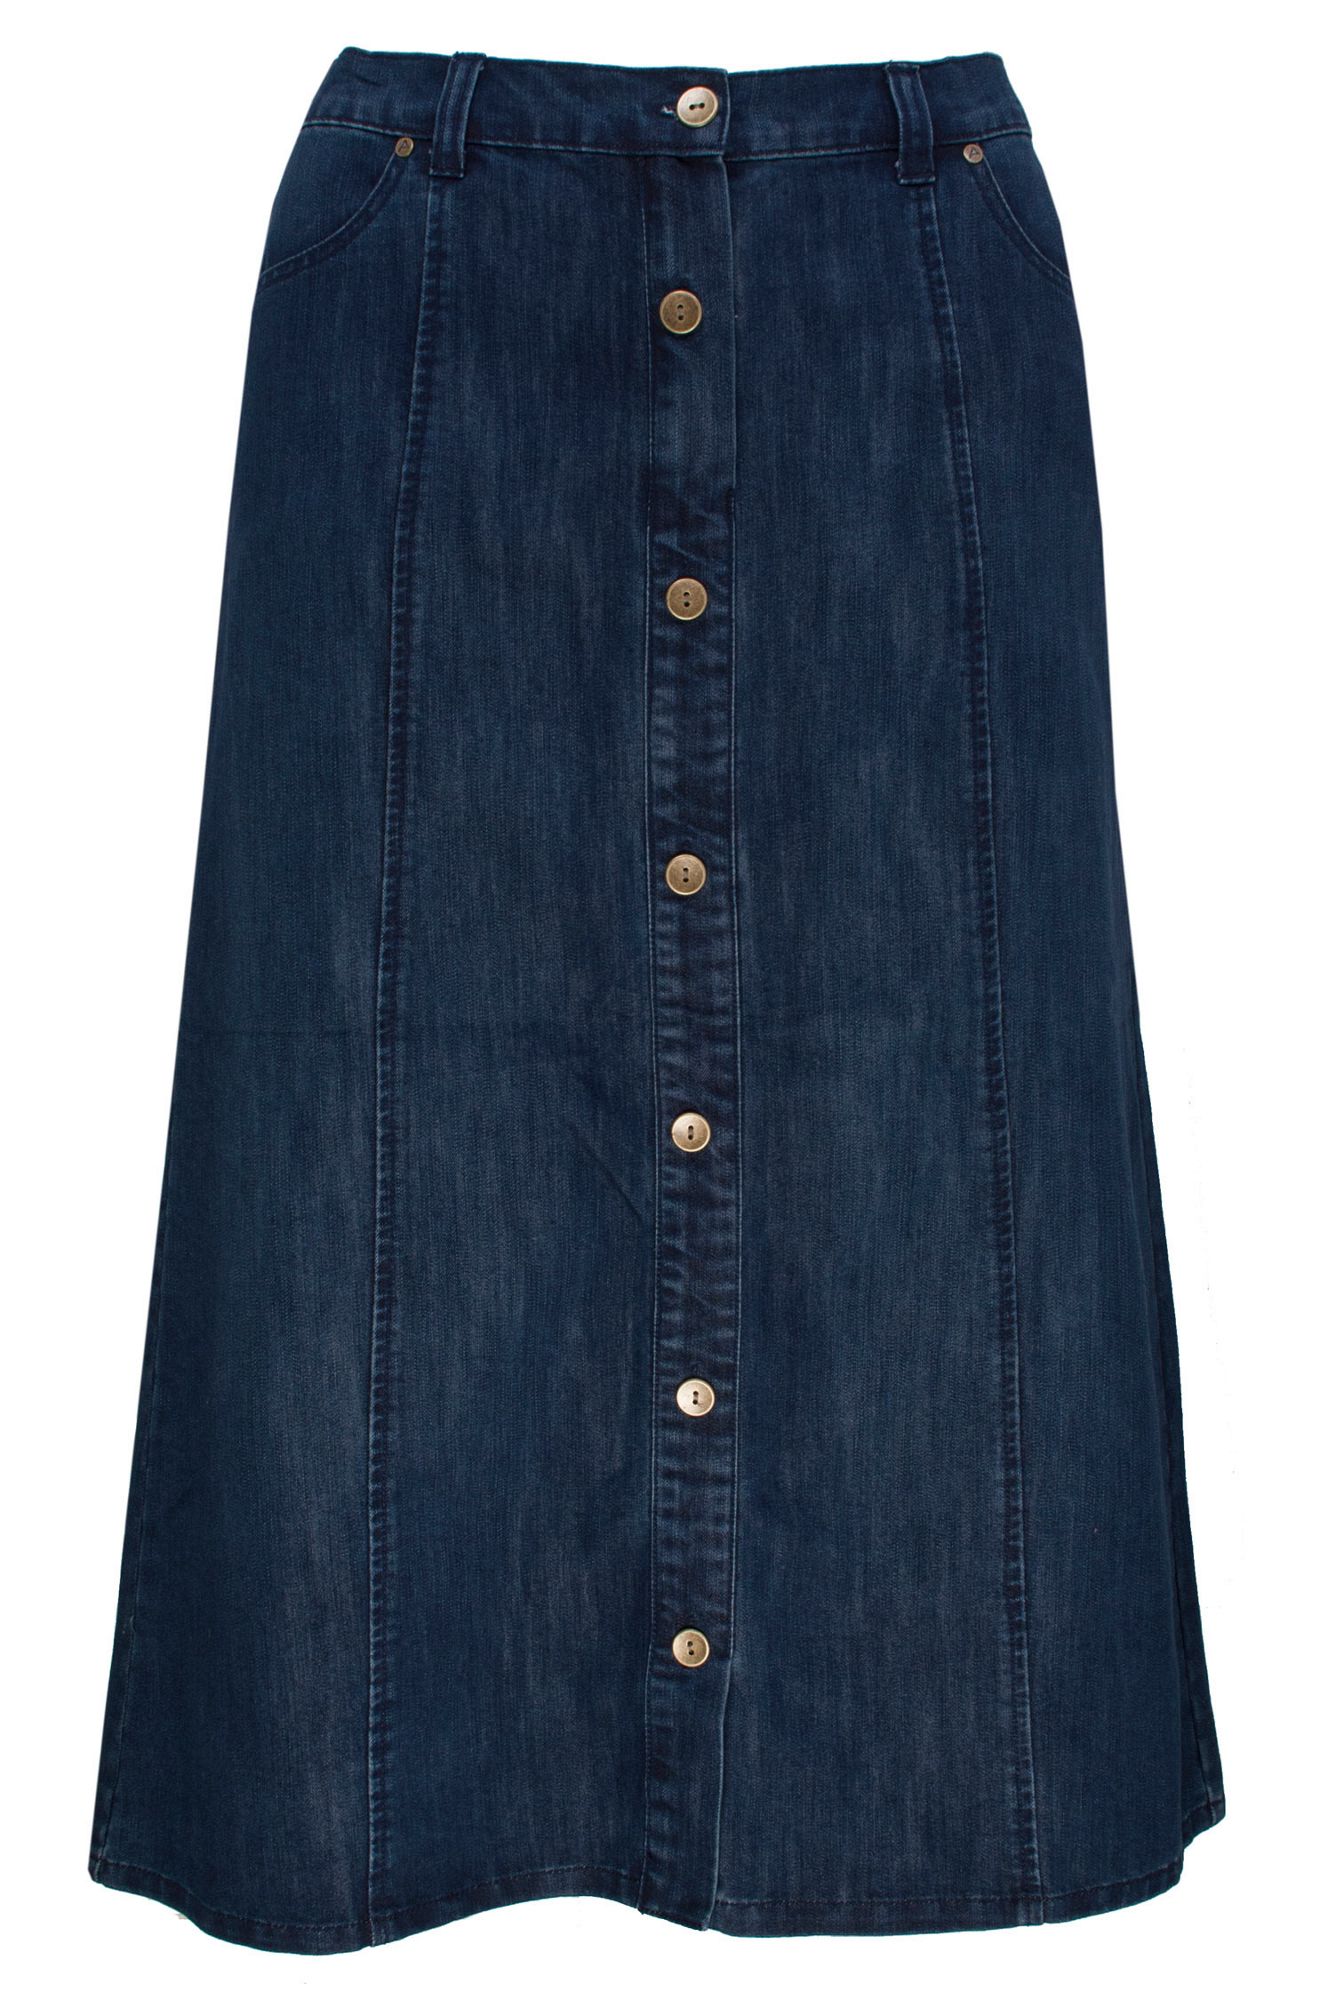 Ann Harvey Button Jean Skirt in Blue (denim) | Lyst